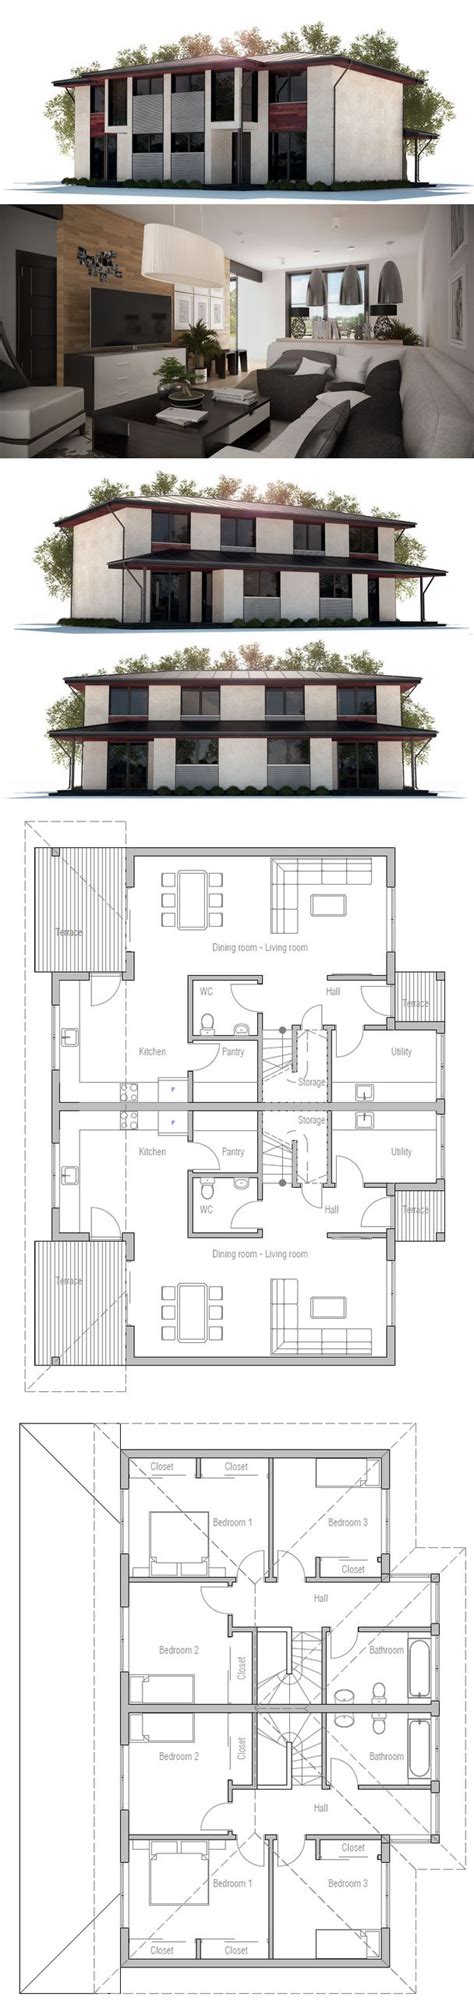 images  duplex house plans  pinterest house master bedrooms  contemporary